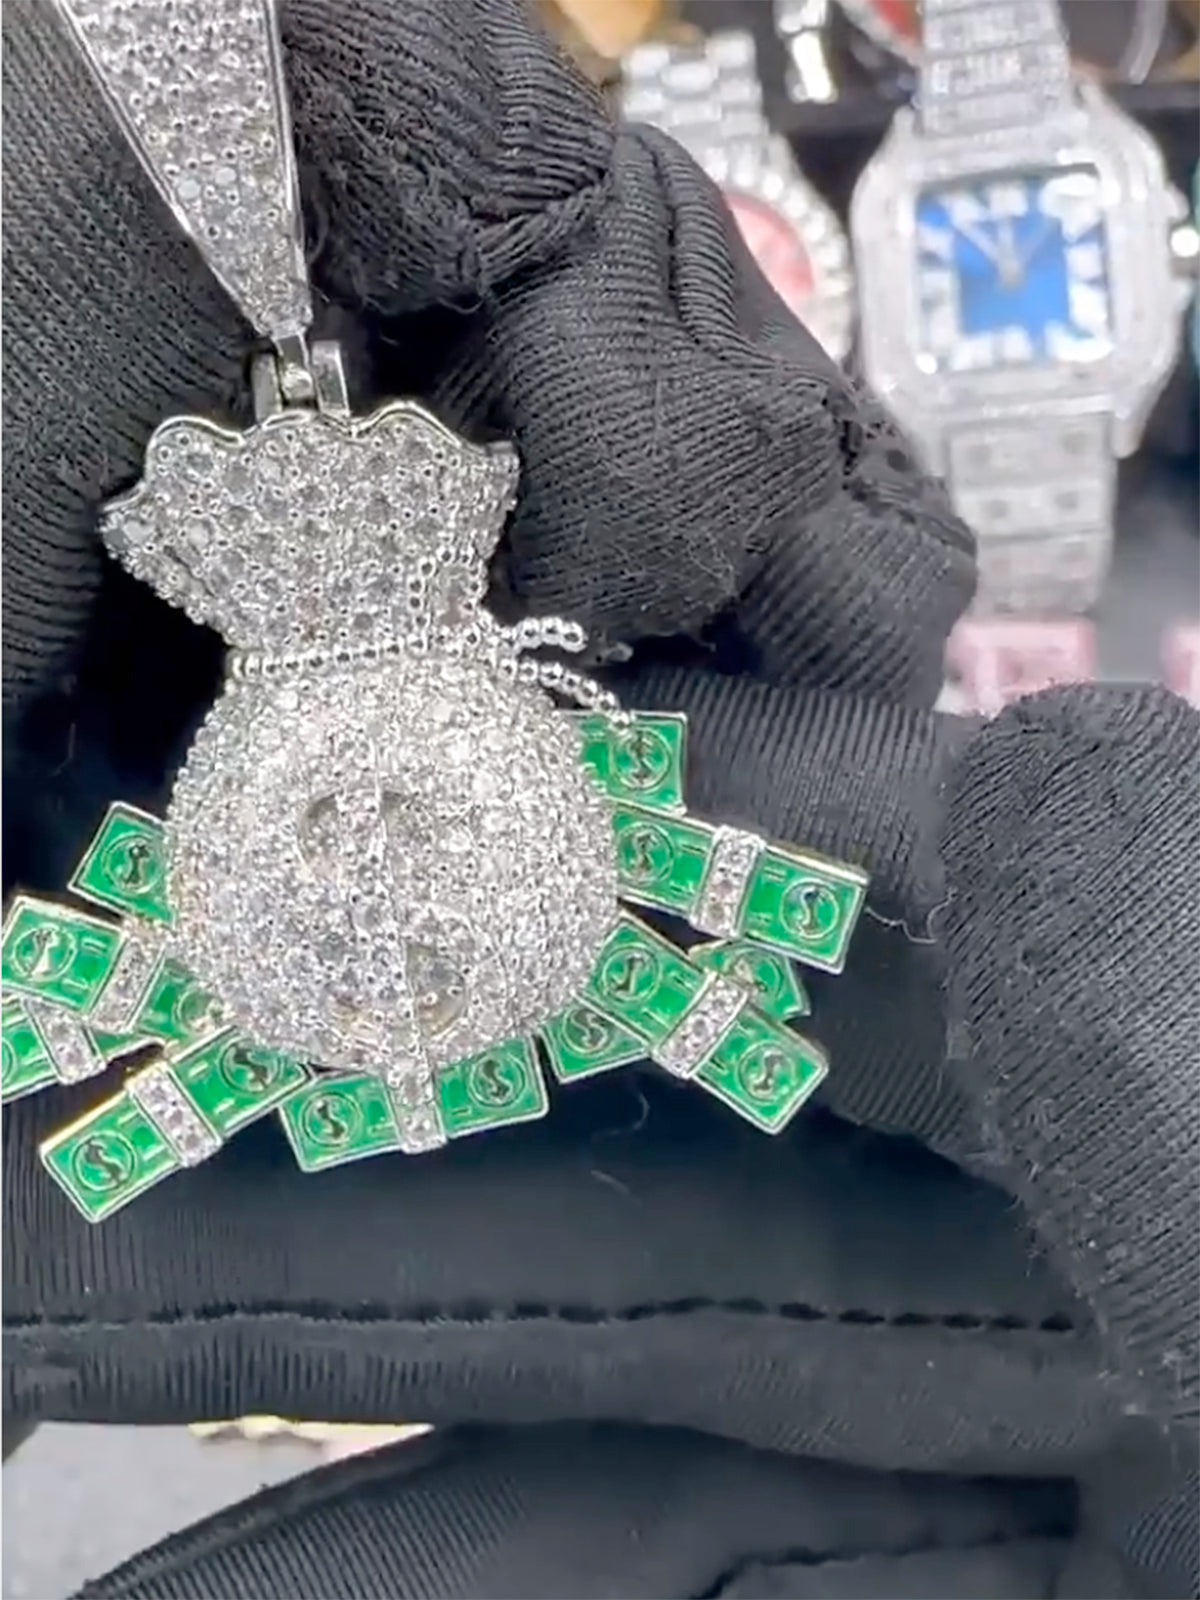 Diamond-studded dollar bag Necklace